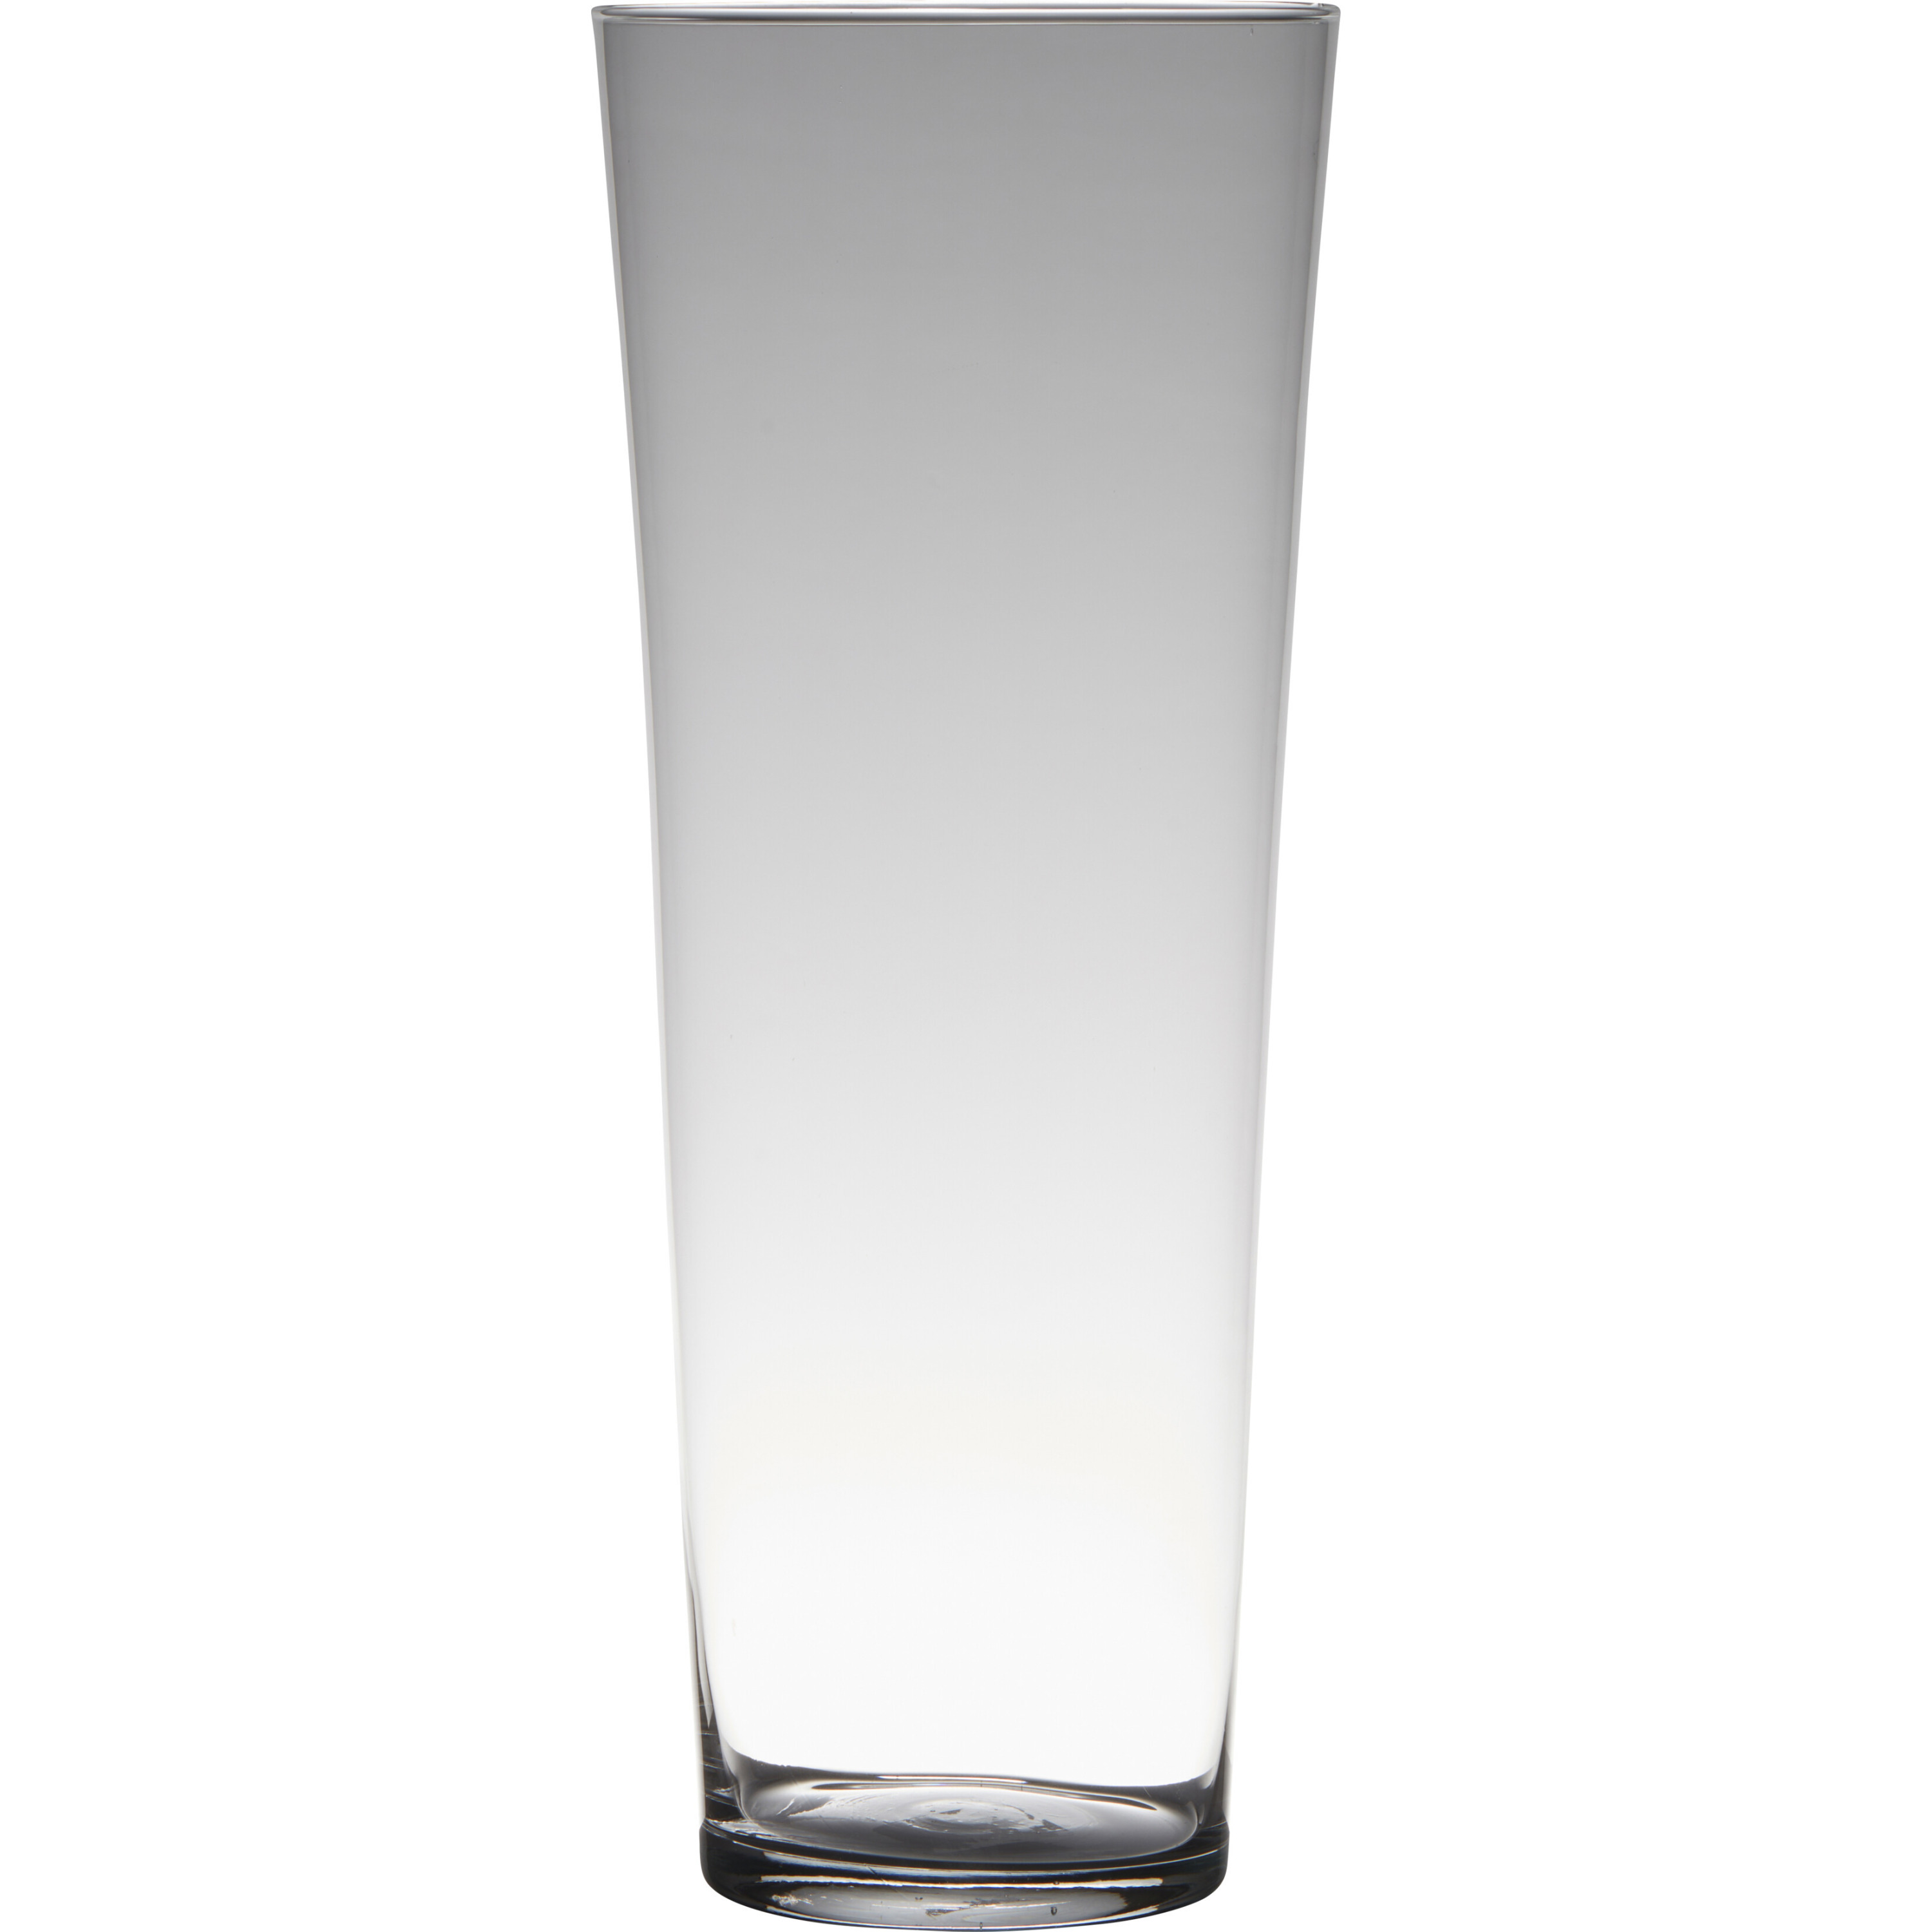 Transparante home-basics conische vaas/vazen van glas 40 x 16.5 cm